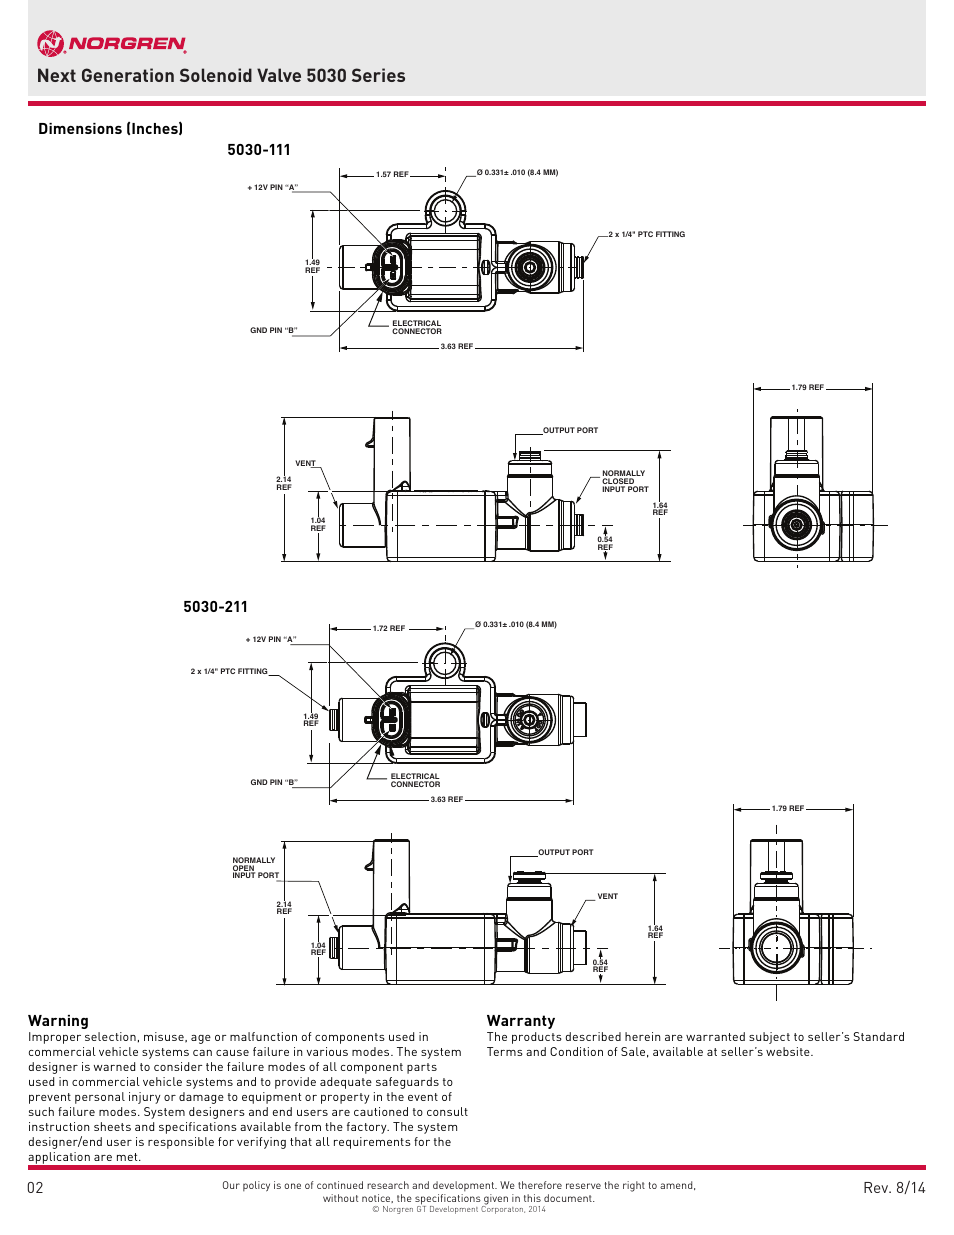 Next generation solenoid valve 5030 series, Warranty  